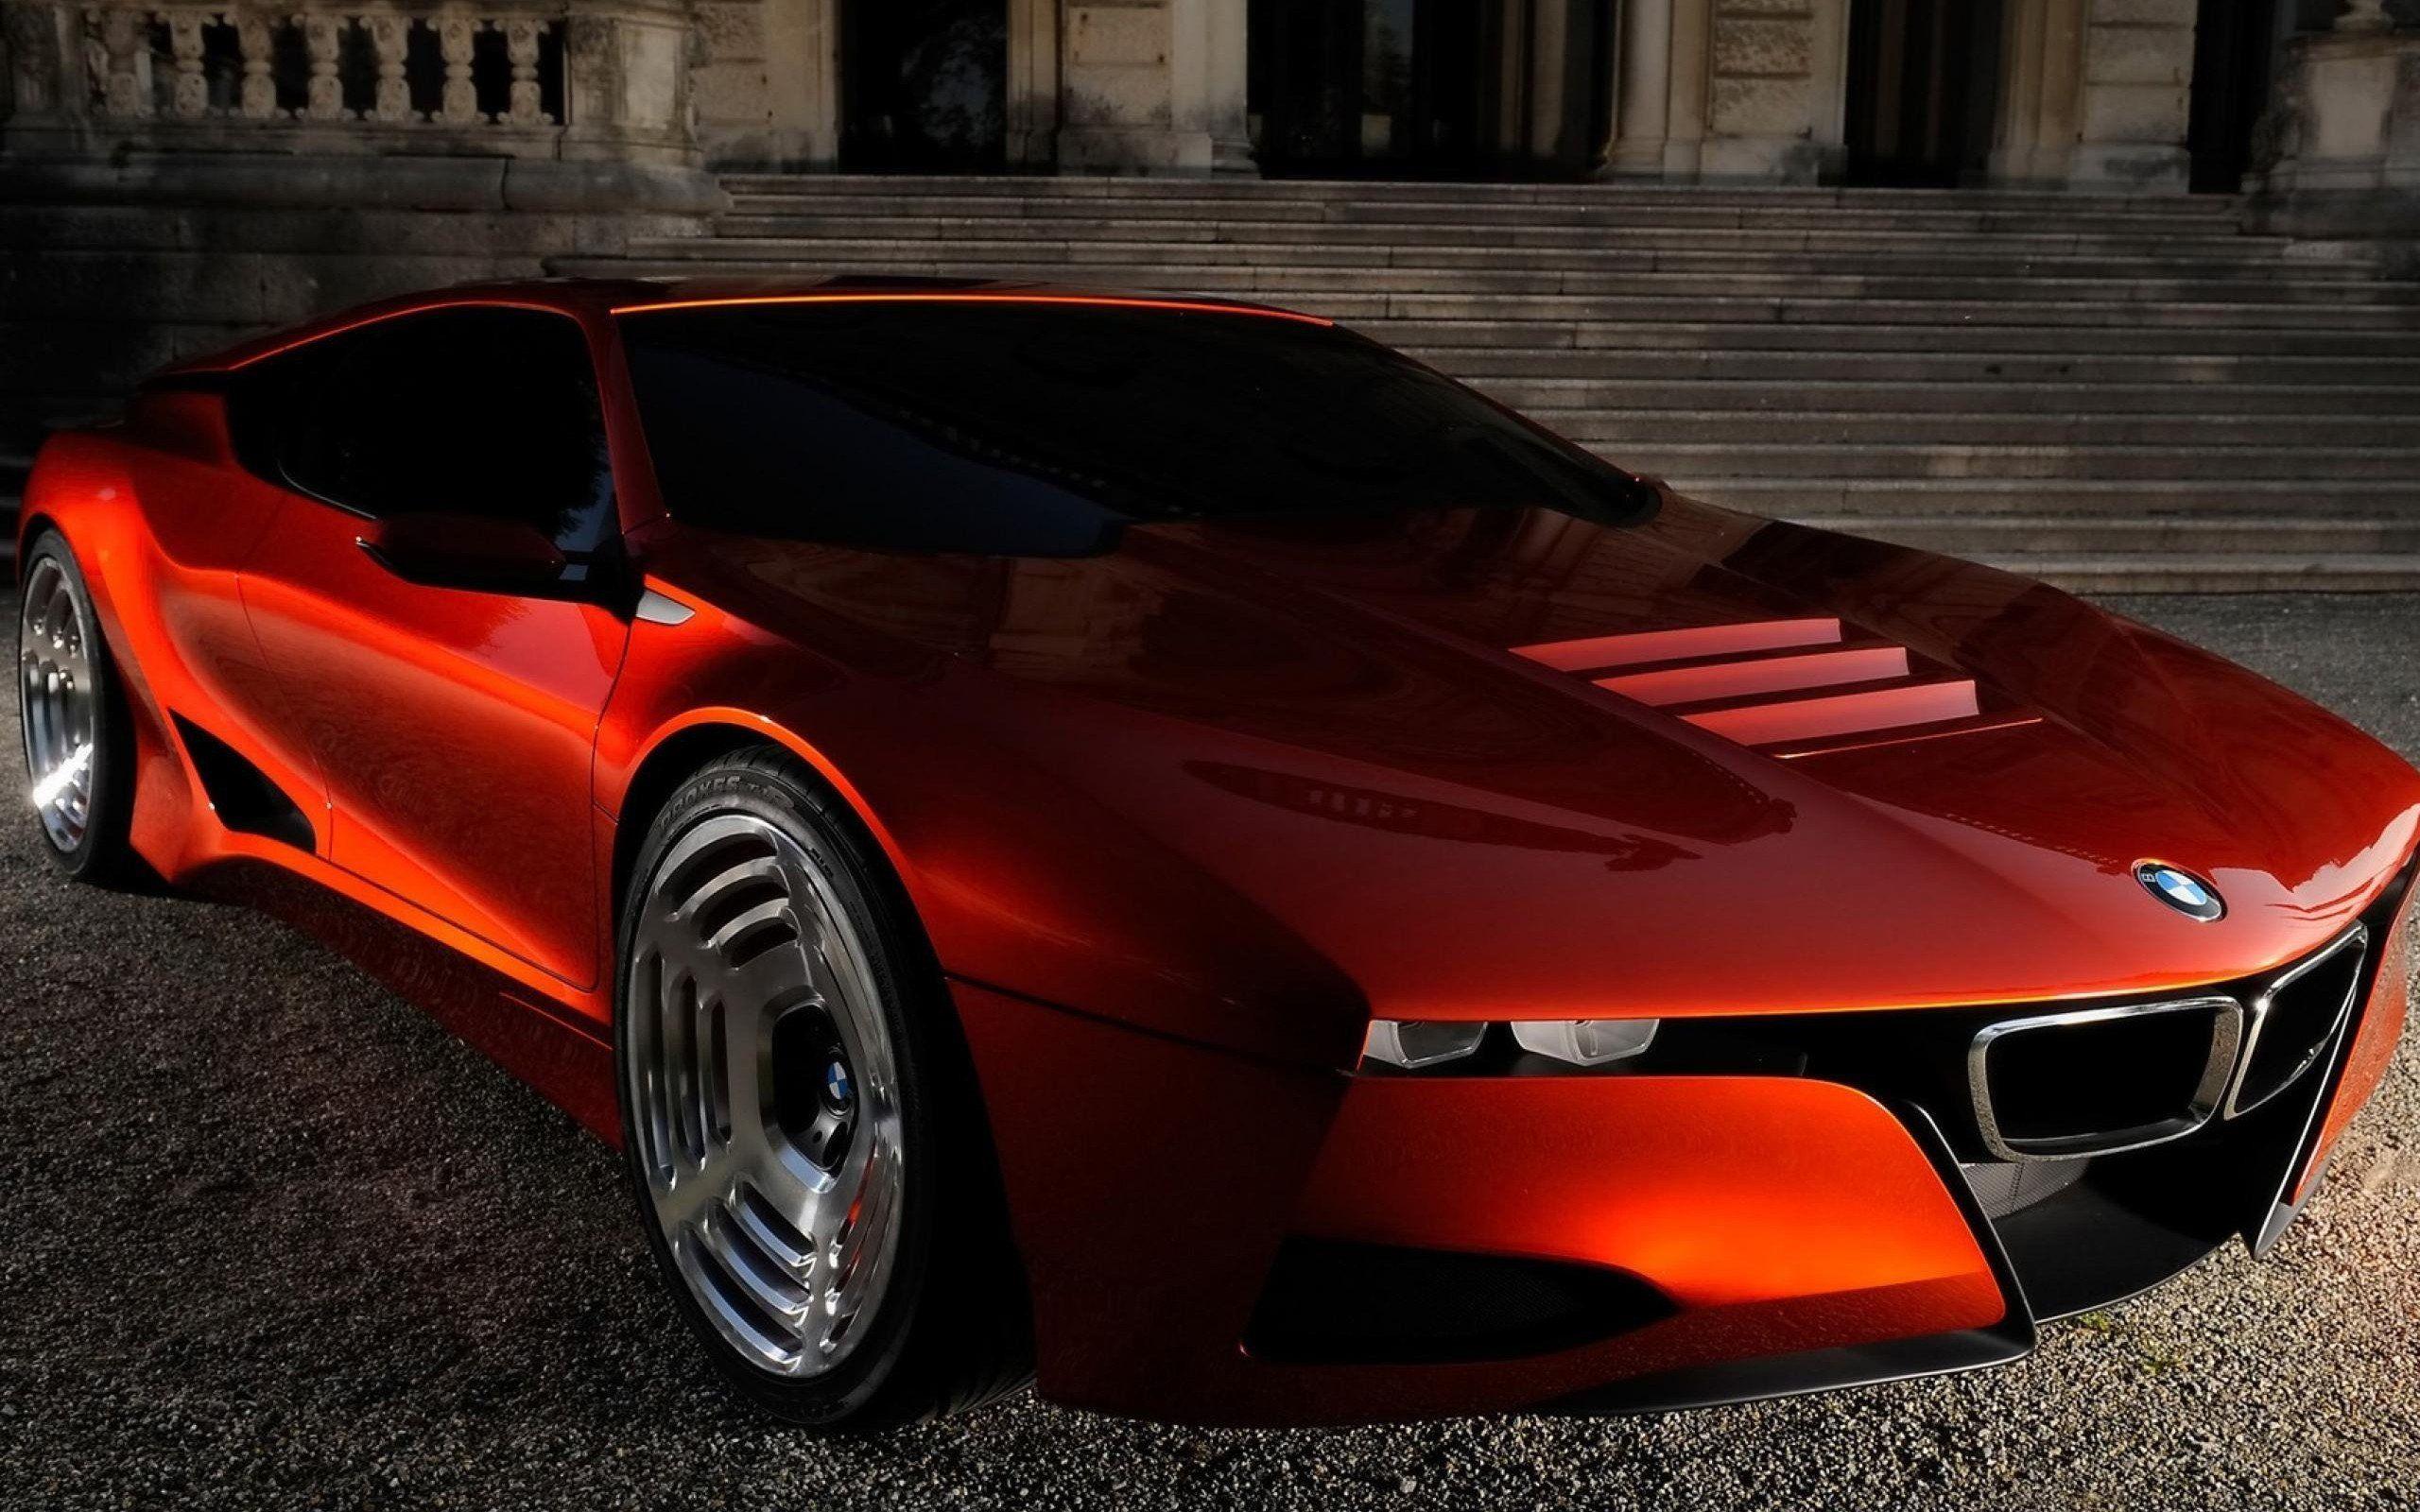 BMW futuristic concept art concept cars sports cars orange cars